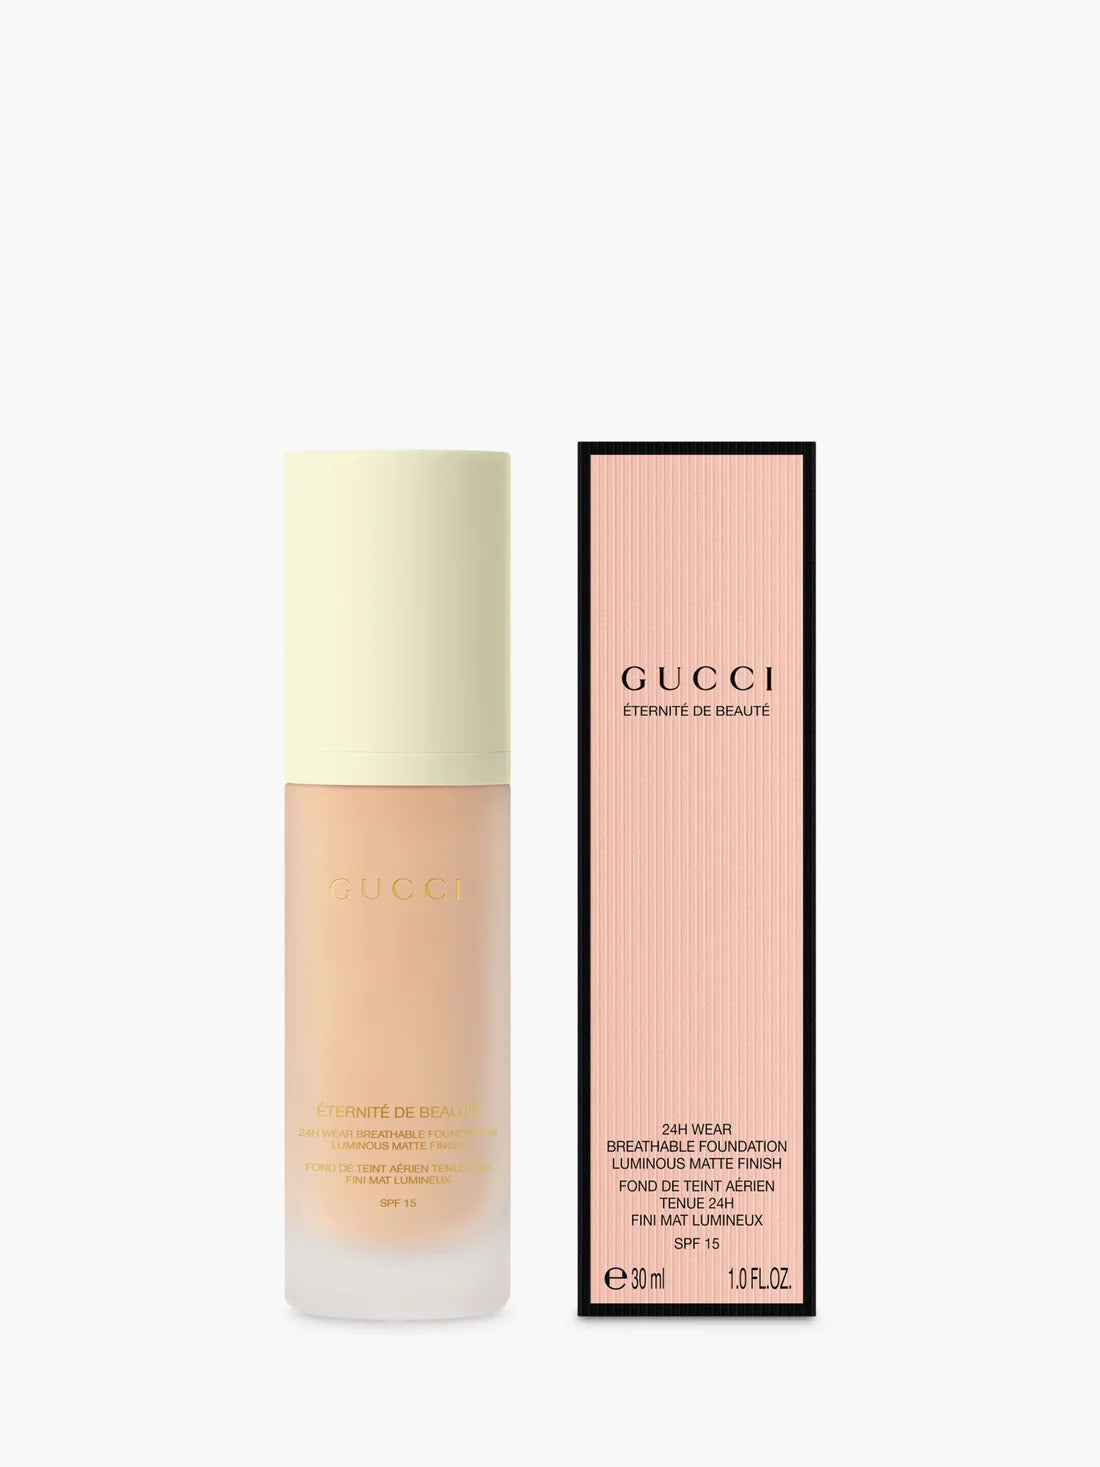 Gucci Eternite De Beaute 24H Wear Breathable Foundation Luminous Matte Finish SPF-15 30ML